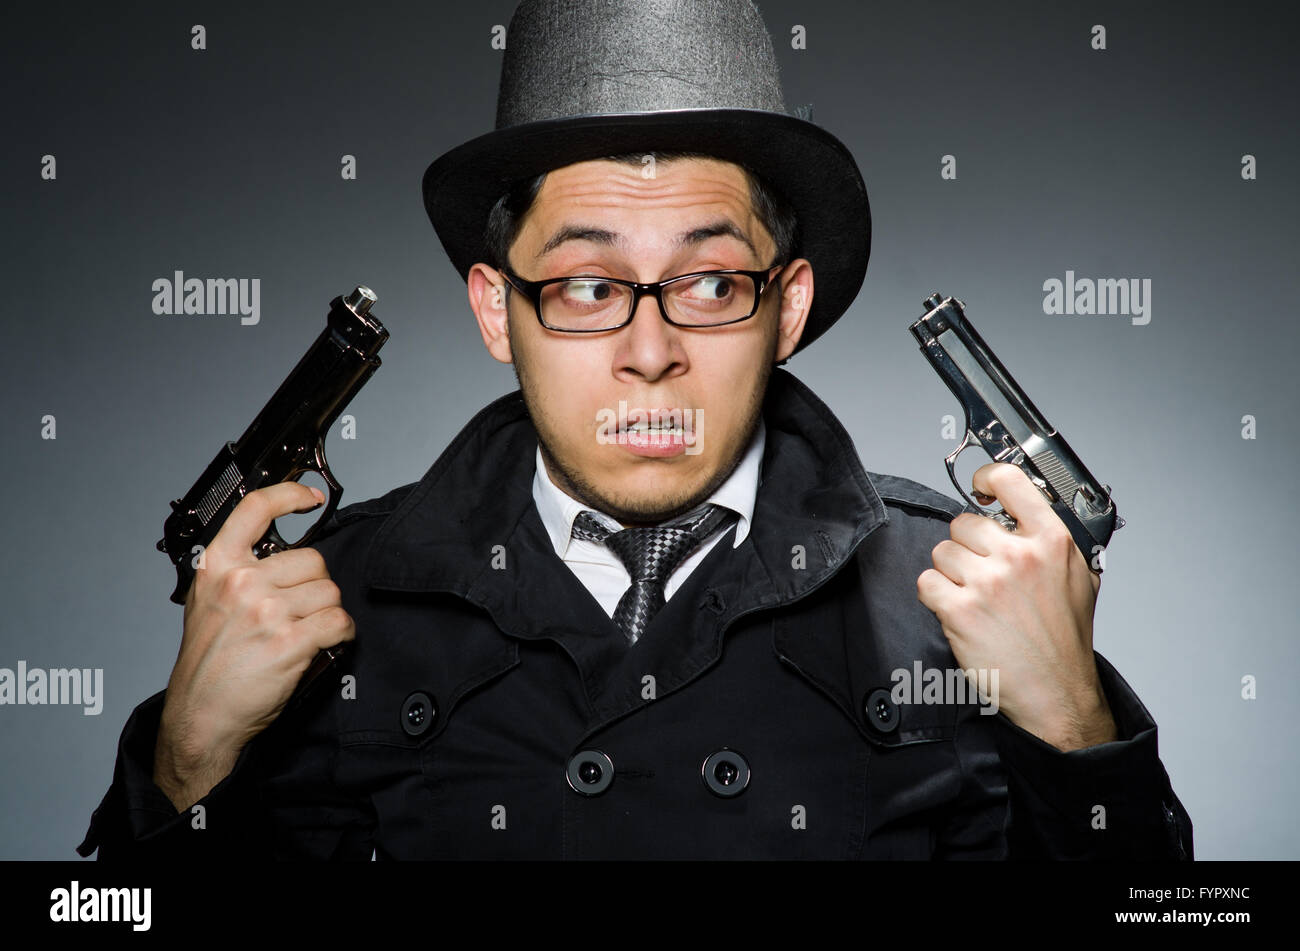 The criminal in black coat holding hadgun against gray Stock Photo